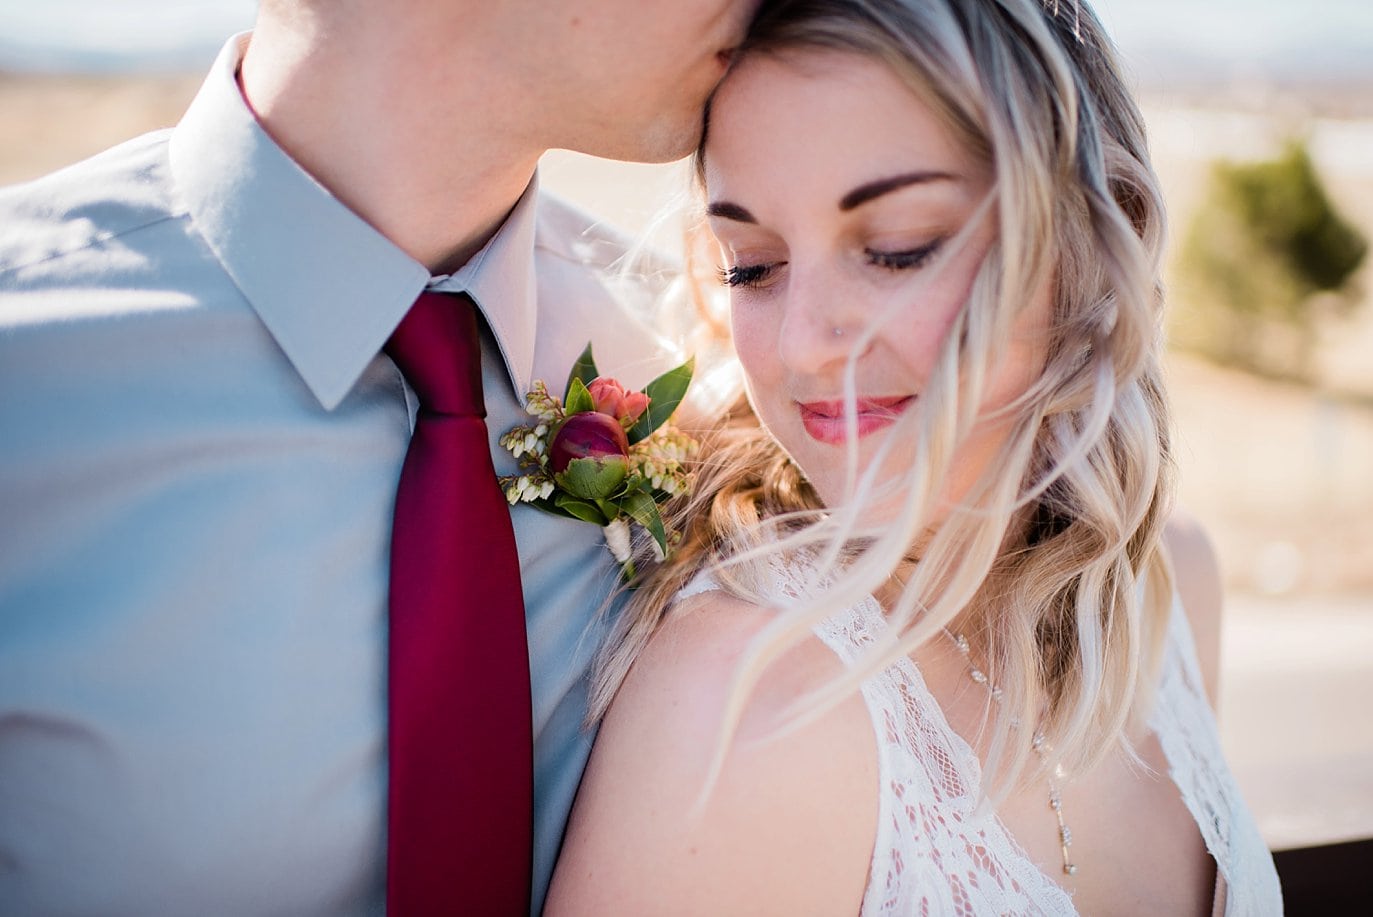 intimate bridal portrait with groom in burgundy tie at Northgate Event Center wedding by Aurora wedding photographer Jennie Crate